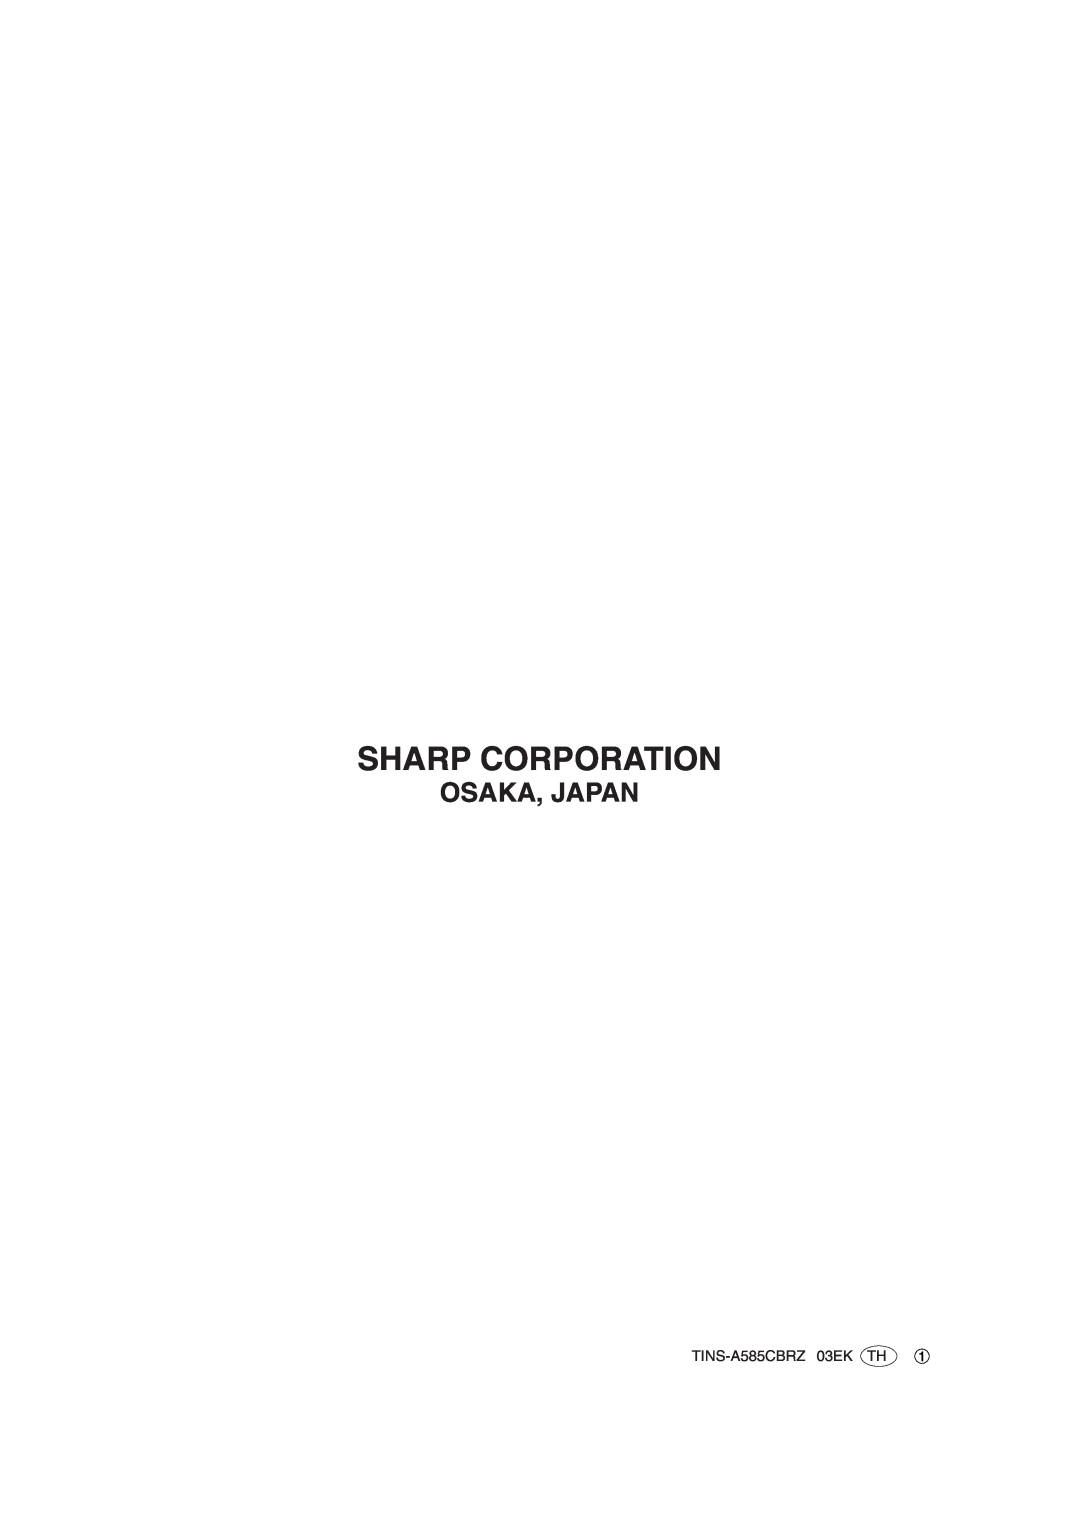 Sharp SJ-25P operation manual Osaka, Japan, Sharp Corporation 